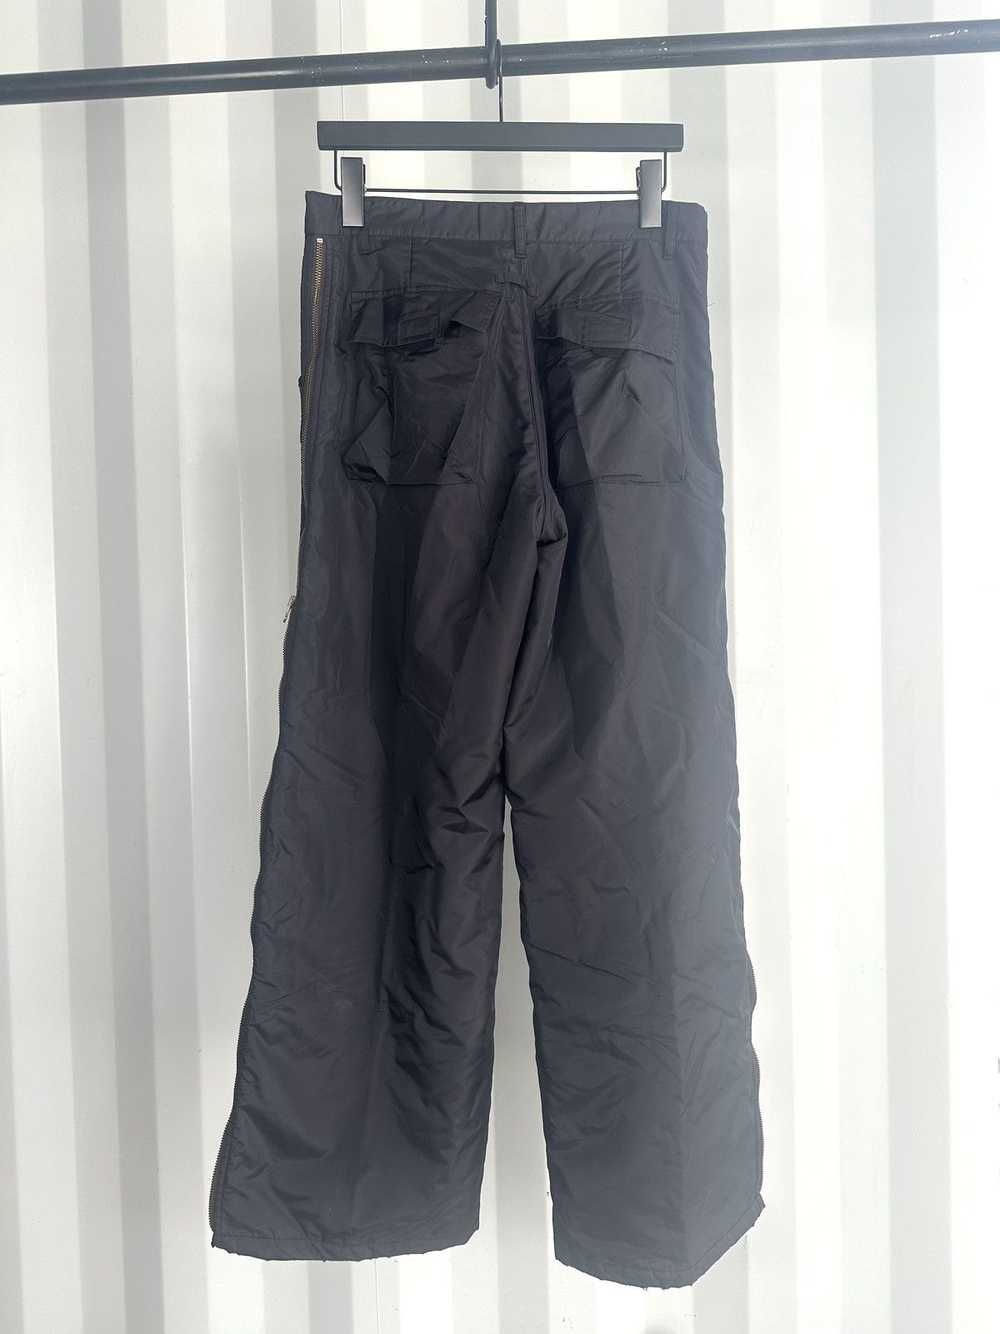 Jean Paul Gaultier Nylon Insulated Side Zip Pants - image 4